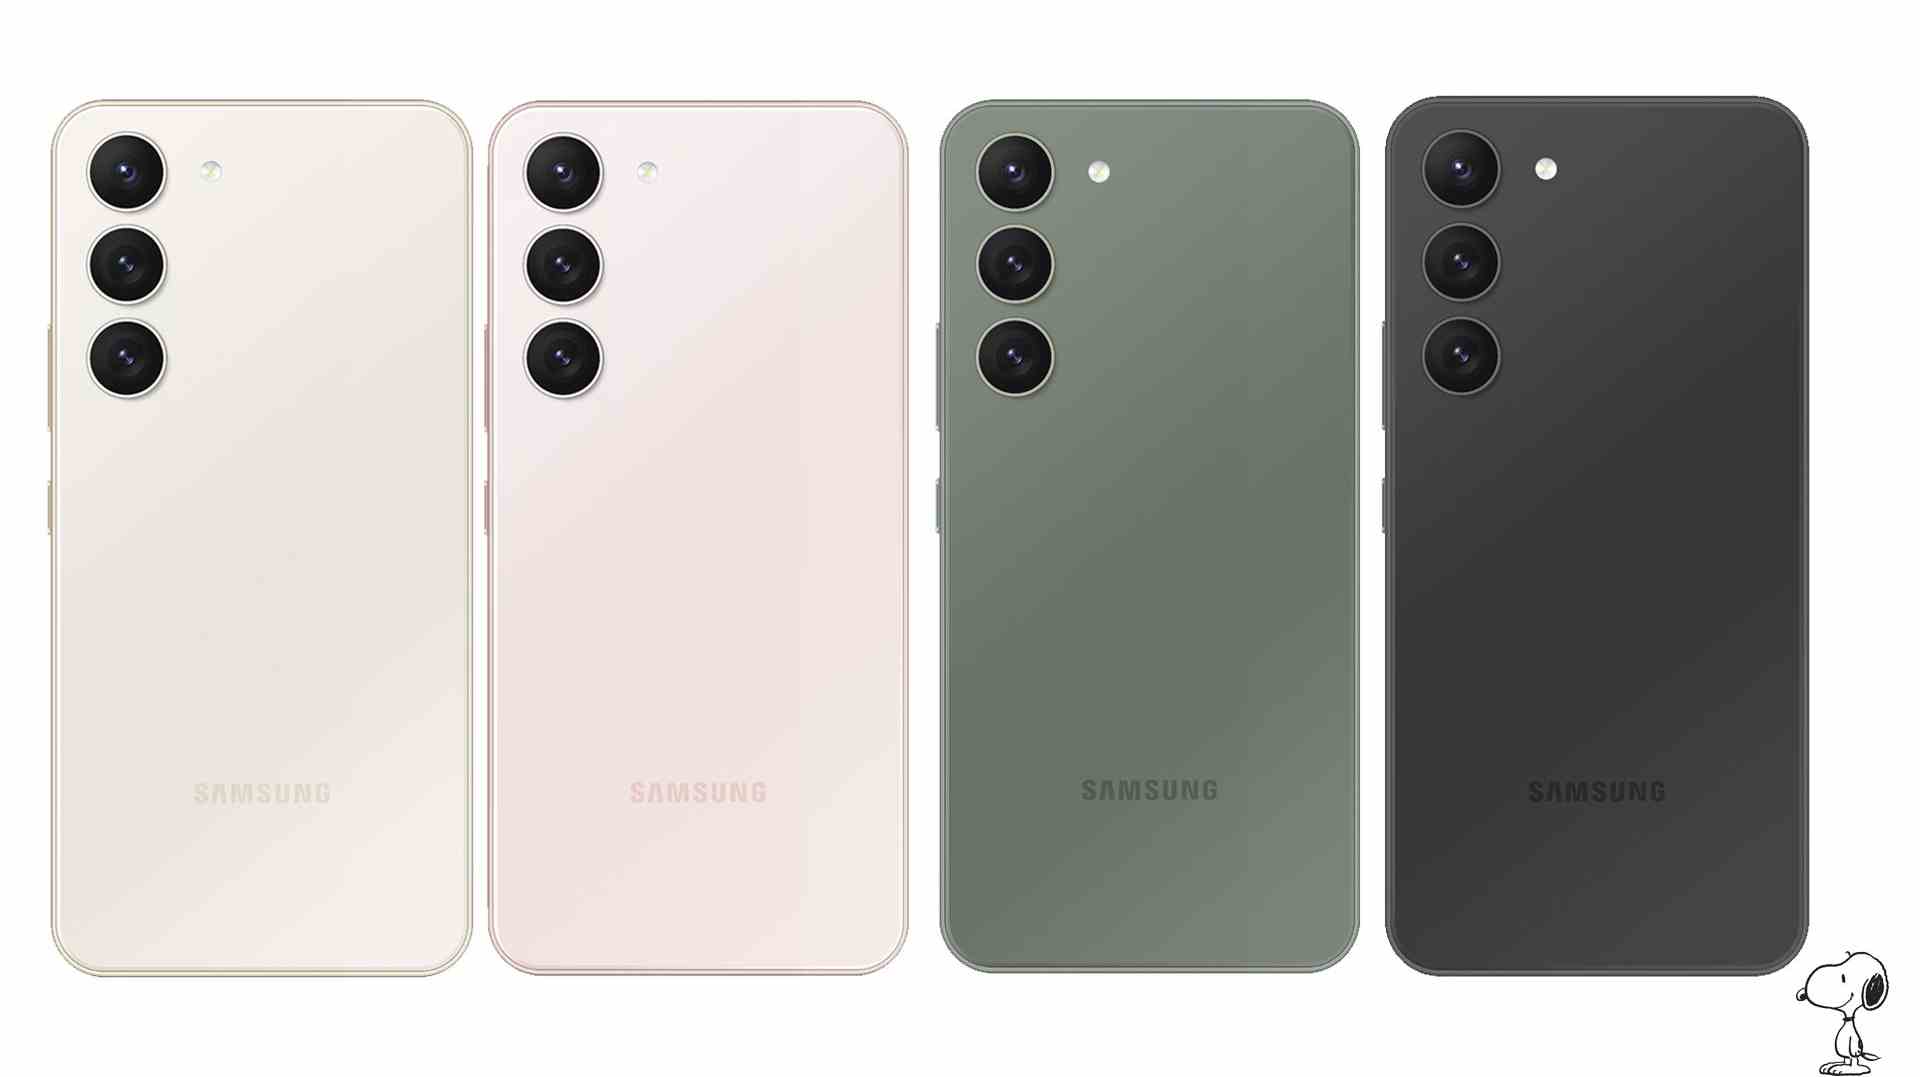 Samsung Galaxy S23'ün dört farklı renkte sızdırılmış görüntüleri